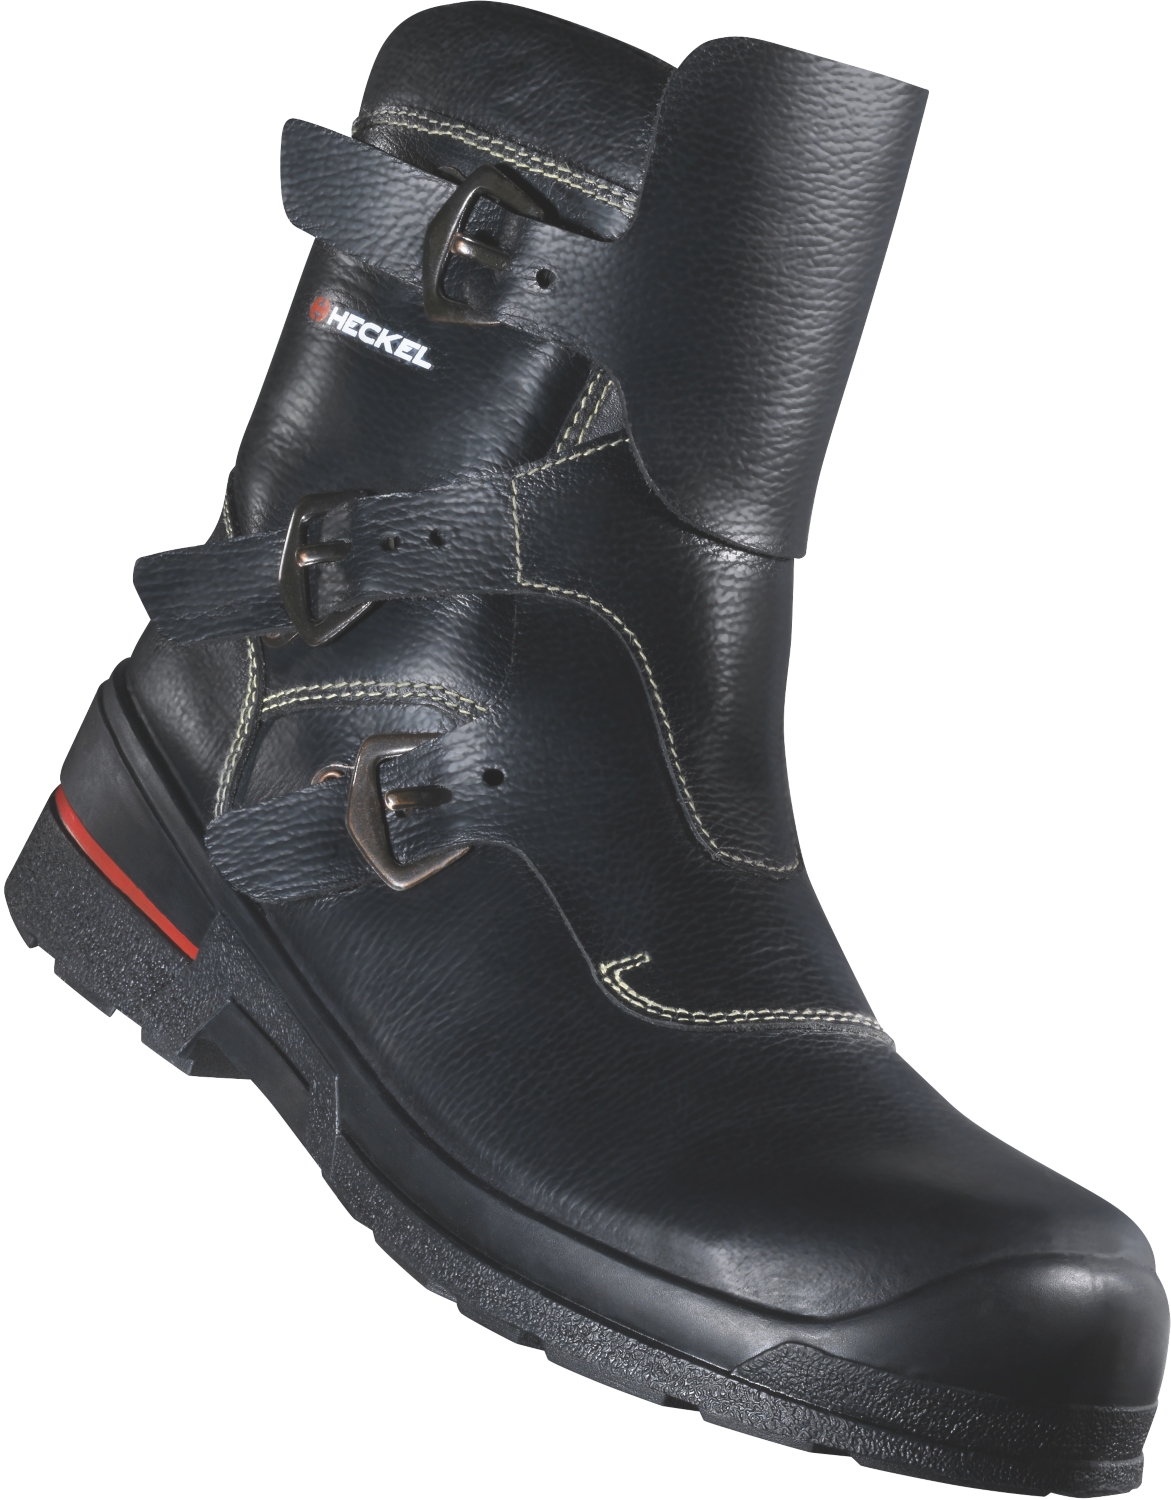 Chaussures hautes MacSole 1.0 - Noir Heckel